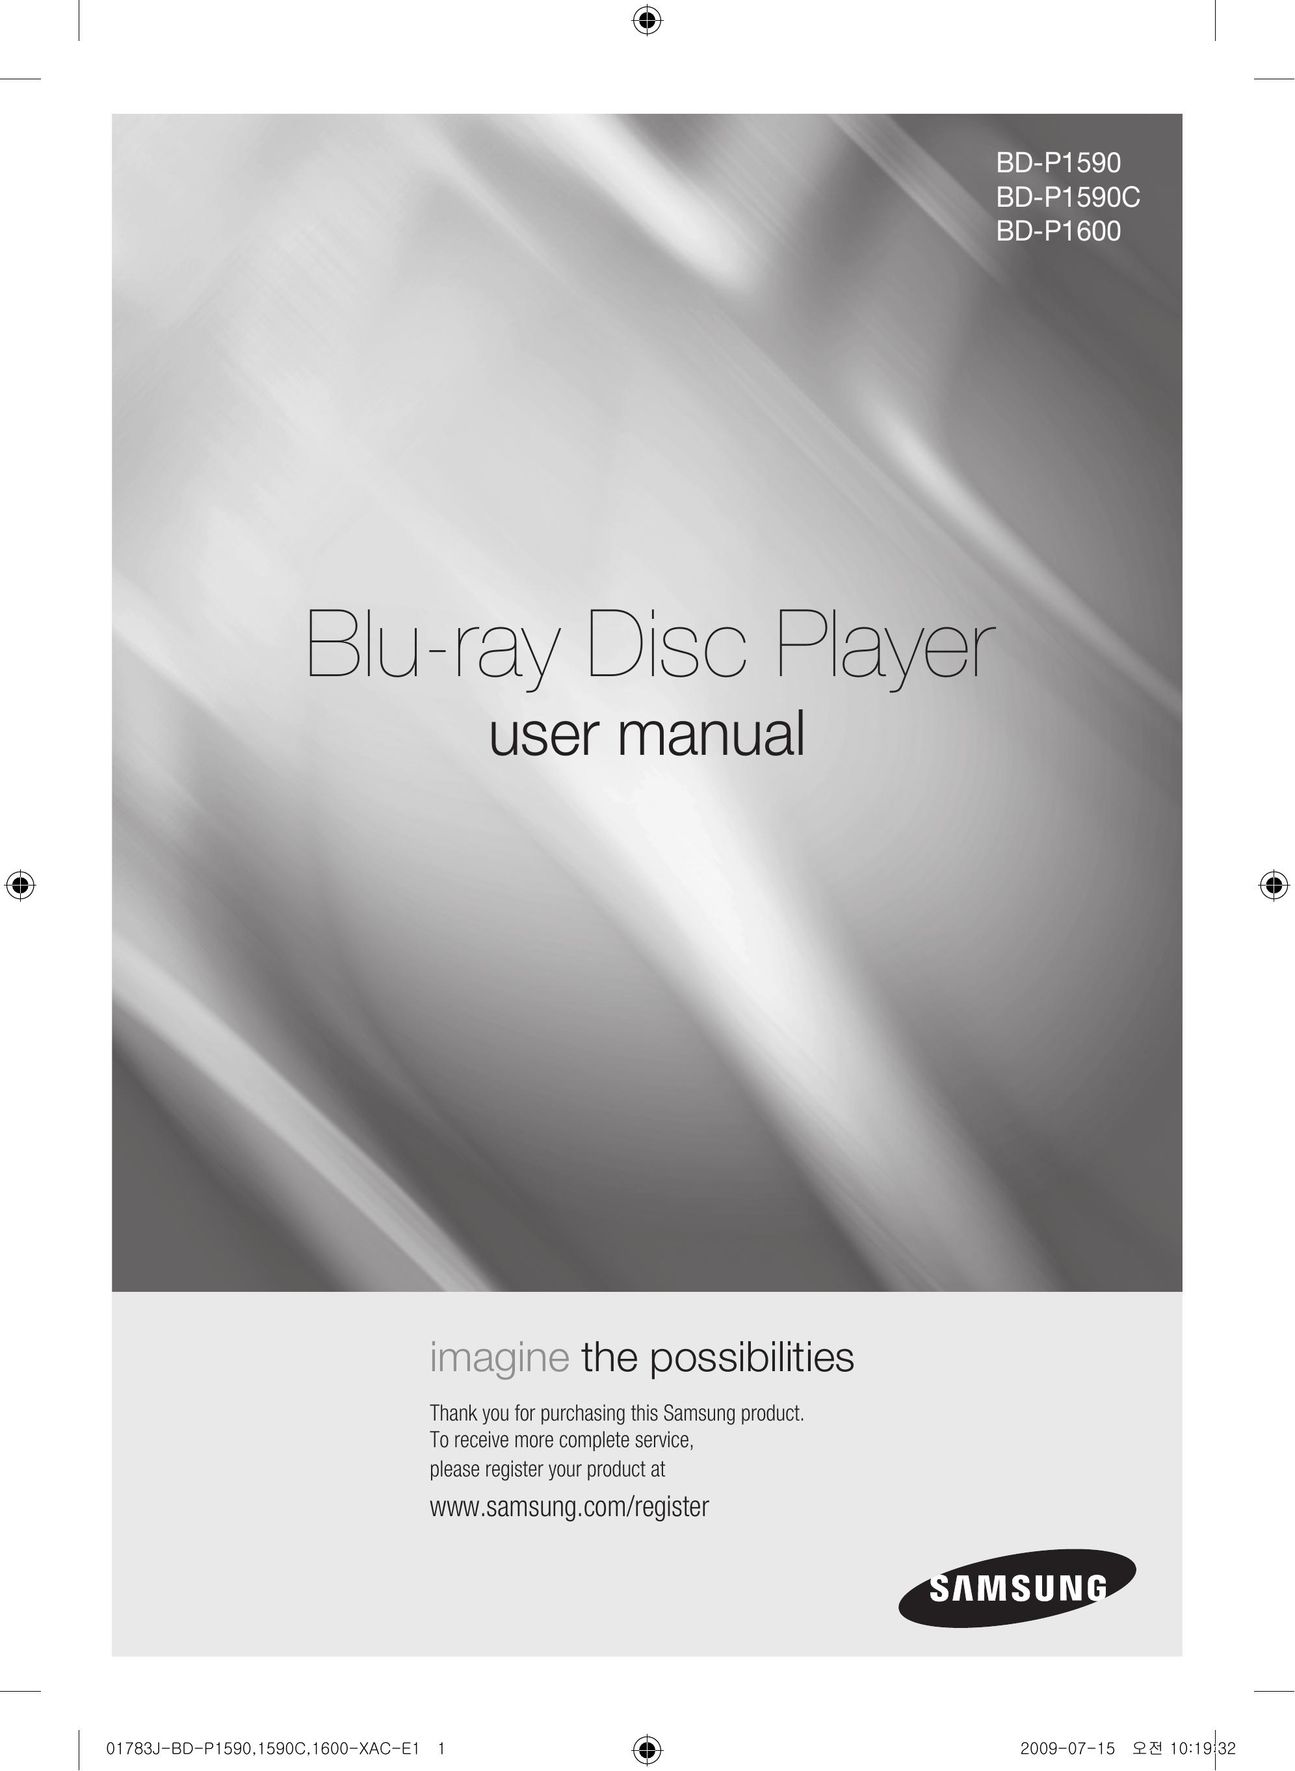 Samsung BD-P1600 DVD Player User Manual